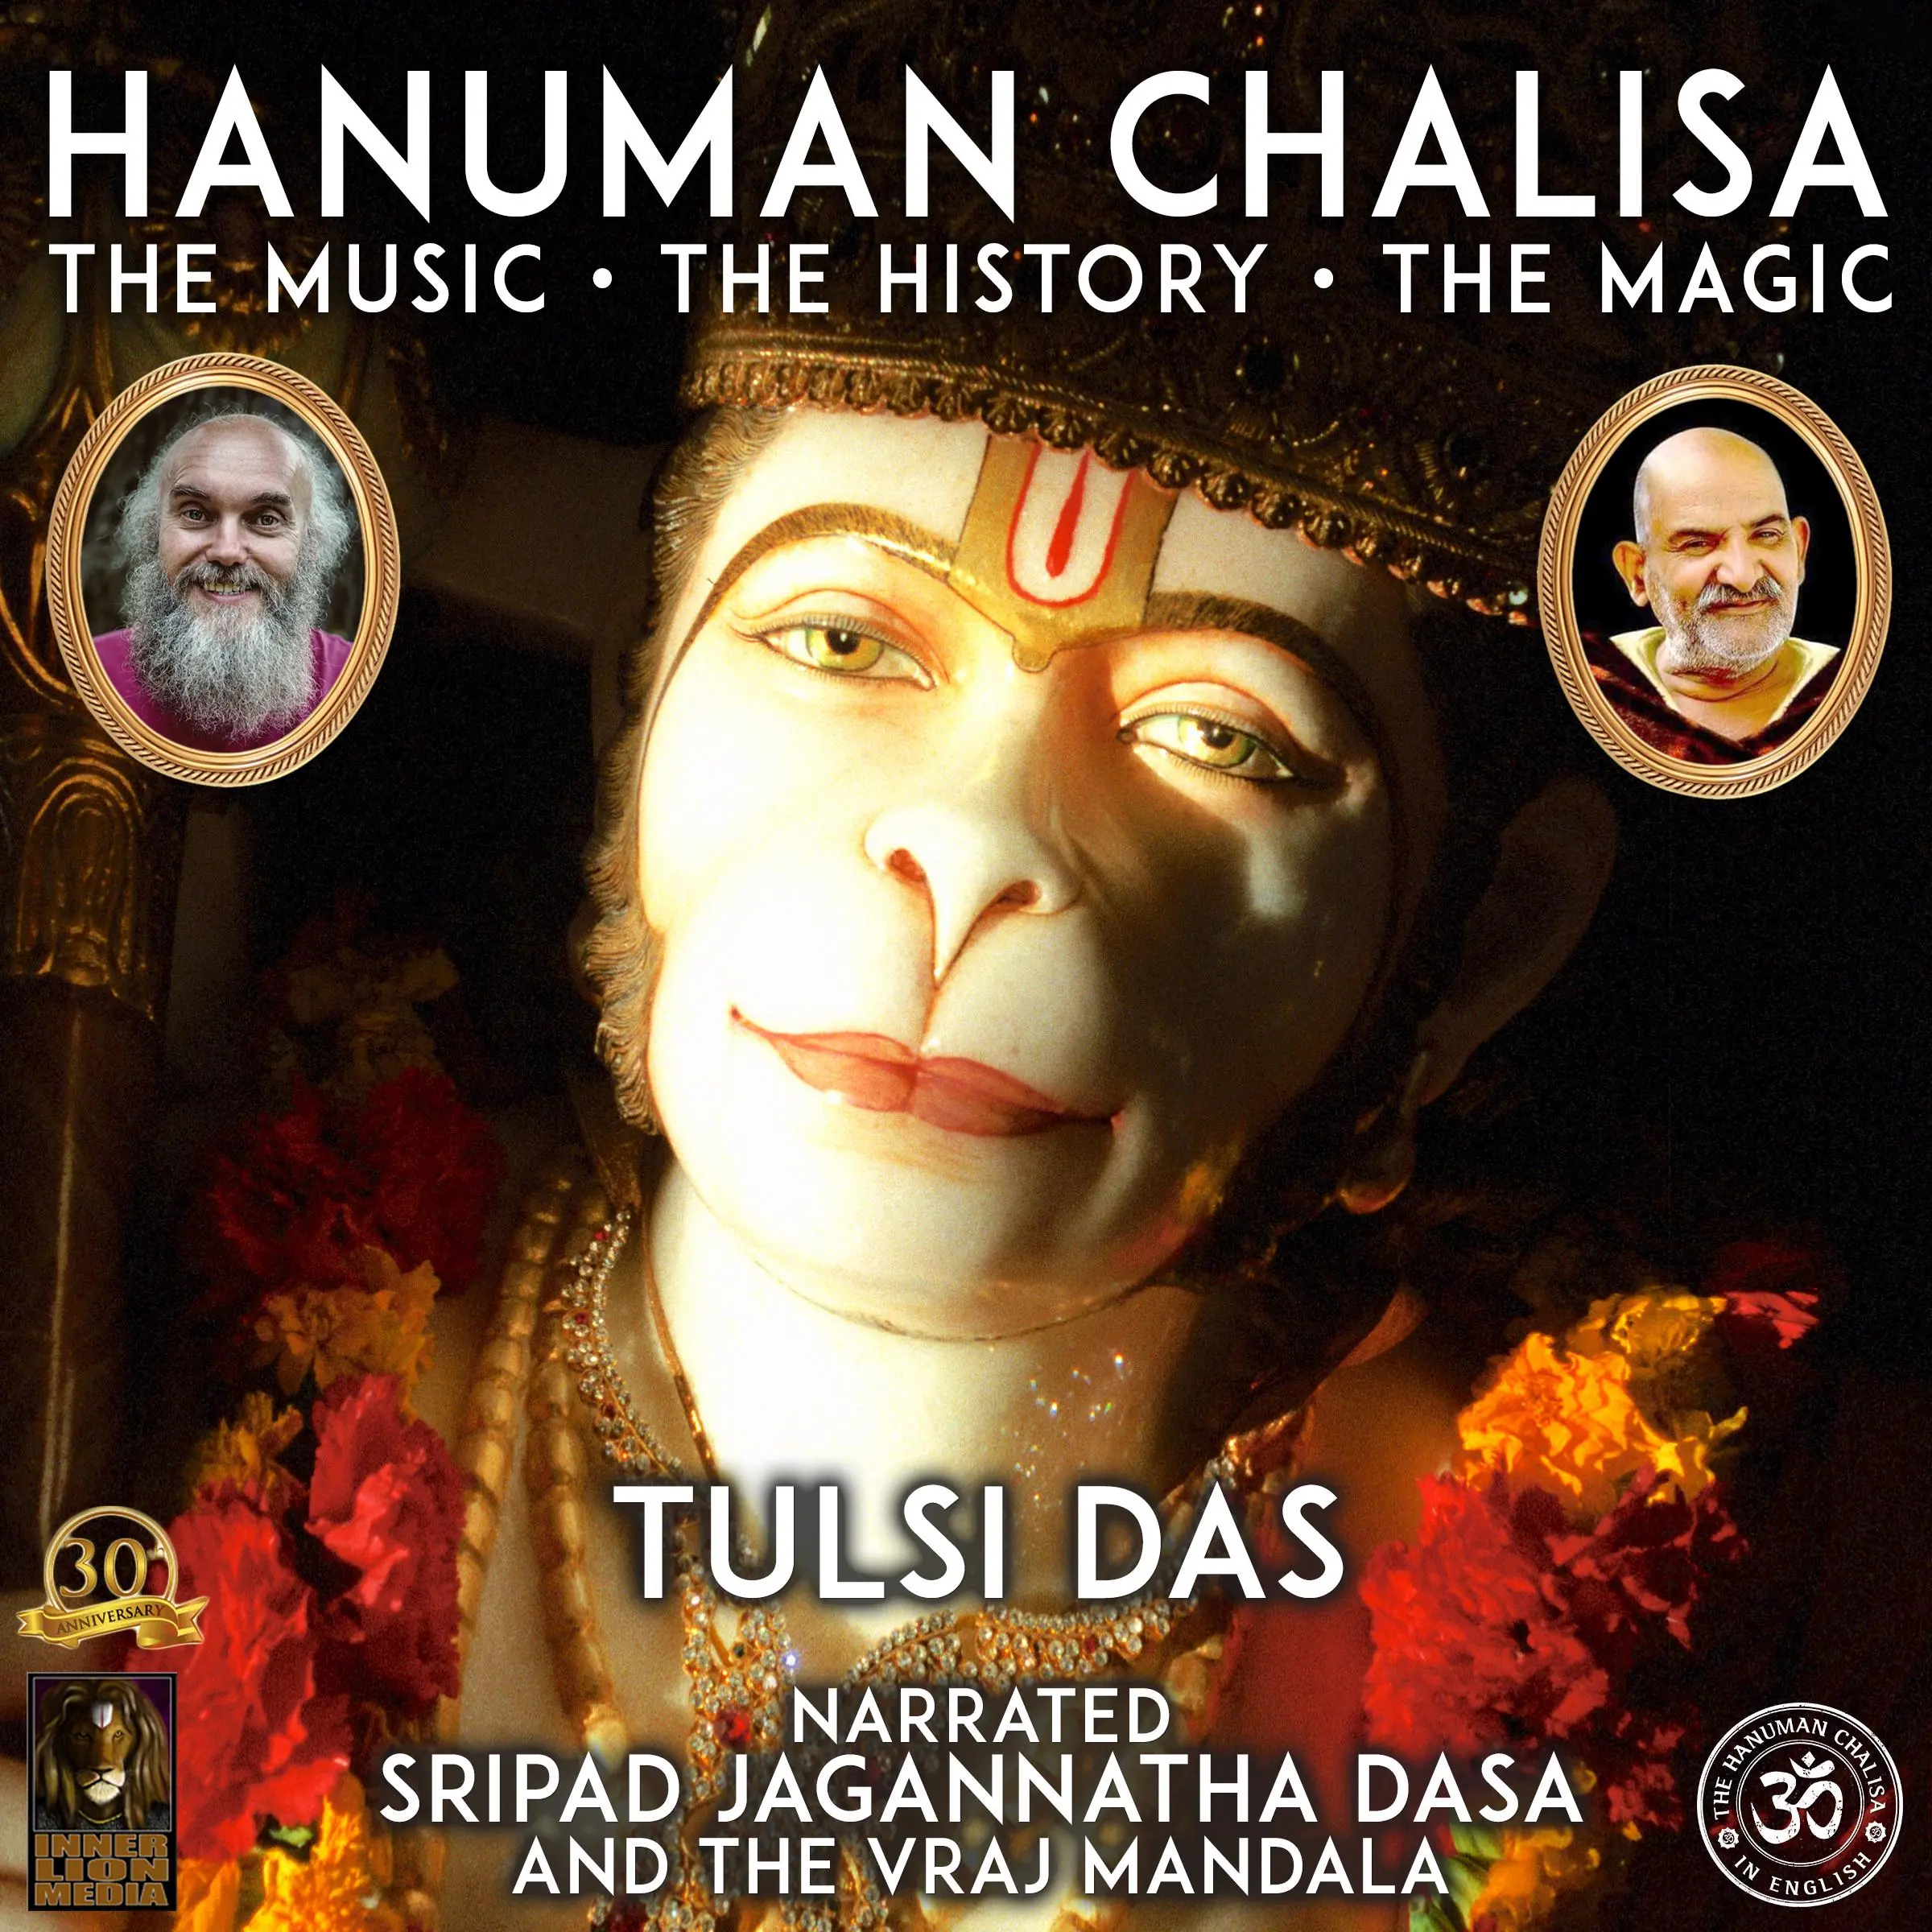 Hanuman Chalisa Audiobook by Tulsi Das